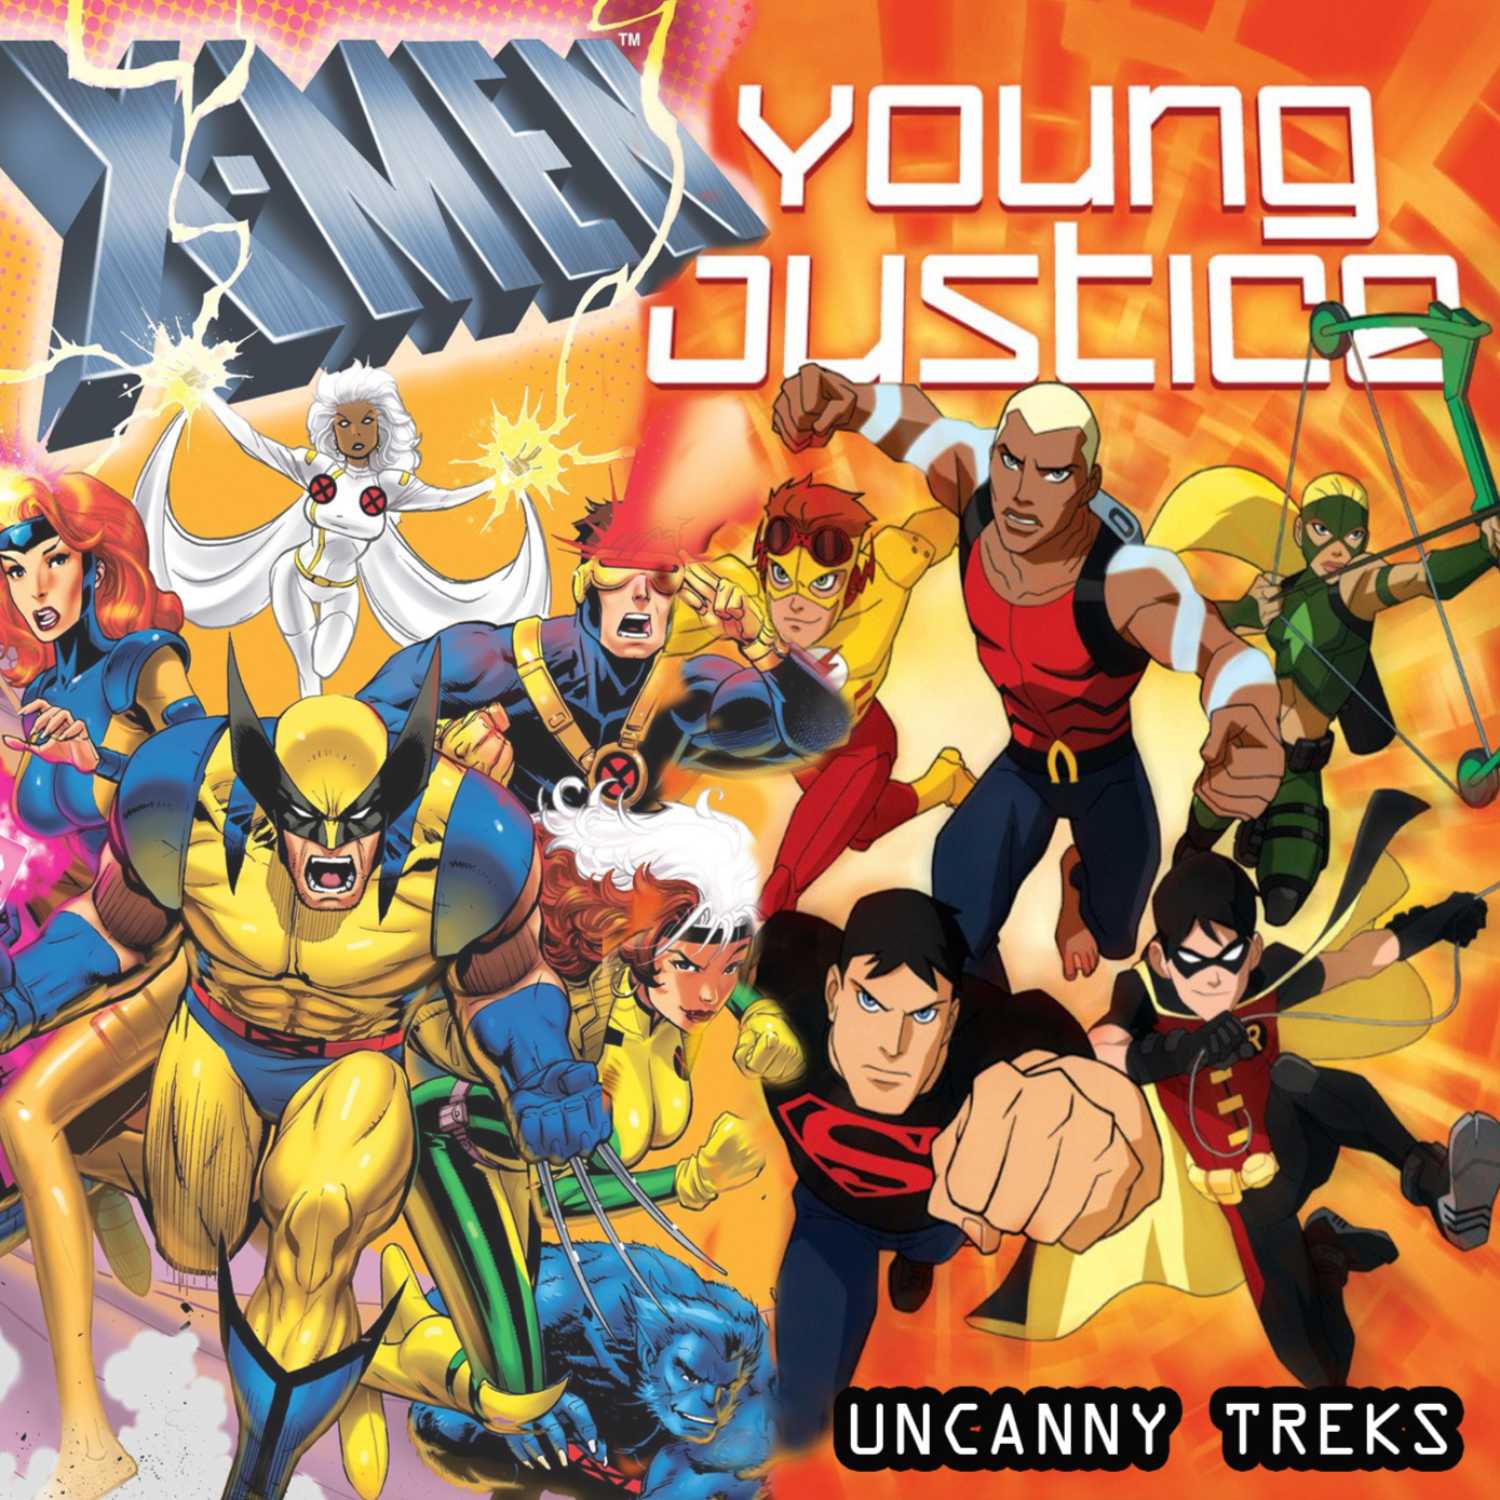 X-Men 92 vs. Young Justice Episode #1 (Unlocked Patreon Content)